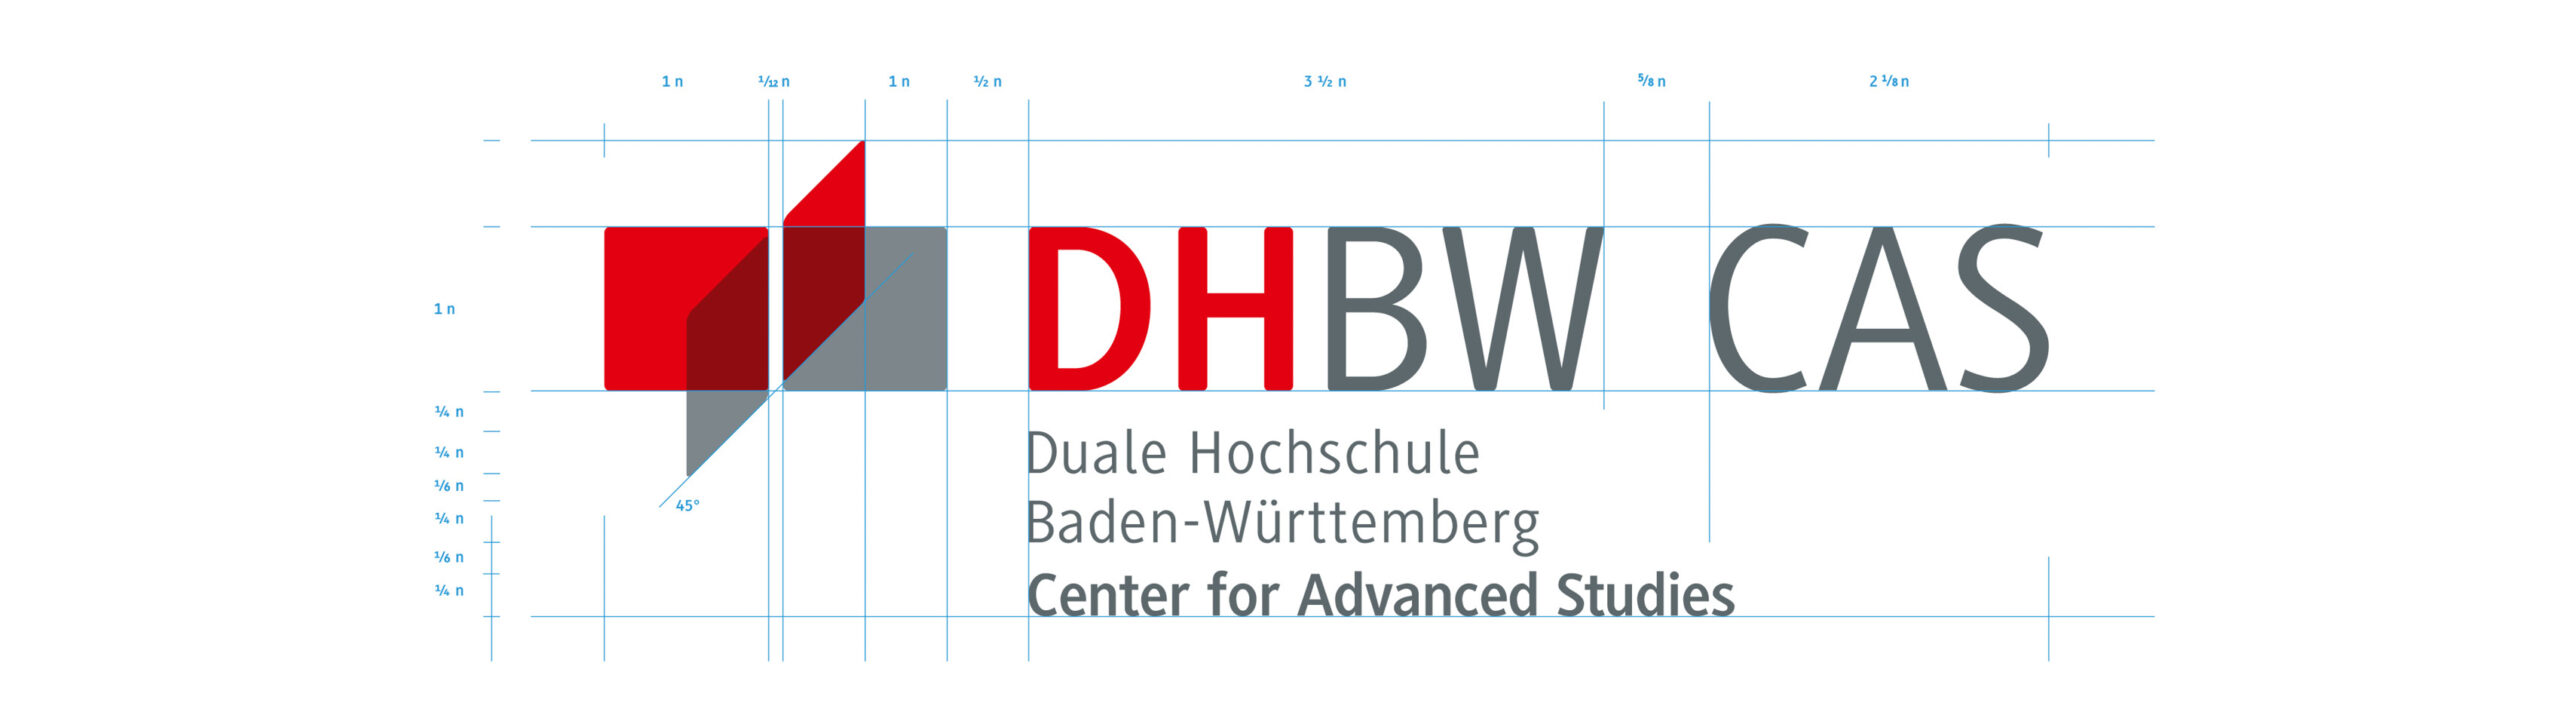 jungkommunikation_projekte_duale-hochschule-baden-wuerttemberg_DHBW_corporate-design_editorial-design_event-kommunikation_logo_1630x916-02